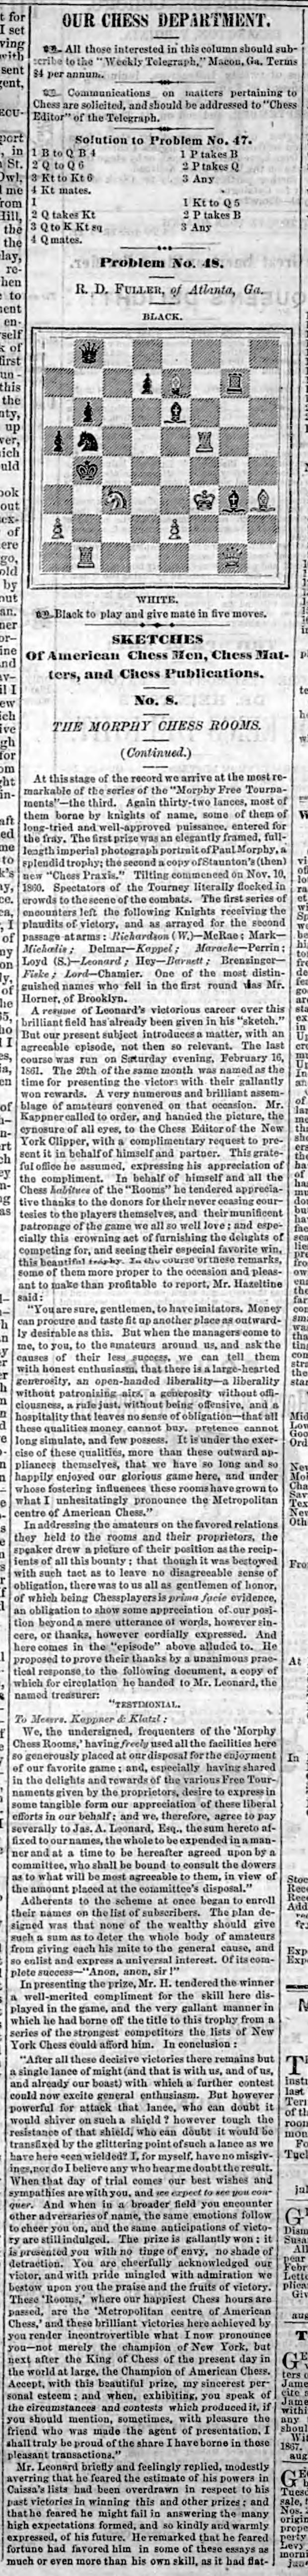 1867.08.02-01 Macon Georgia Weekly Telegraph.jpg